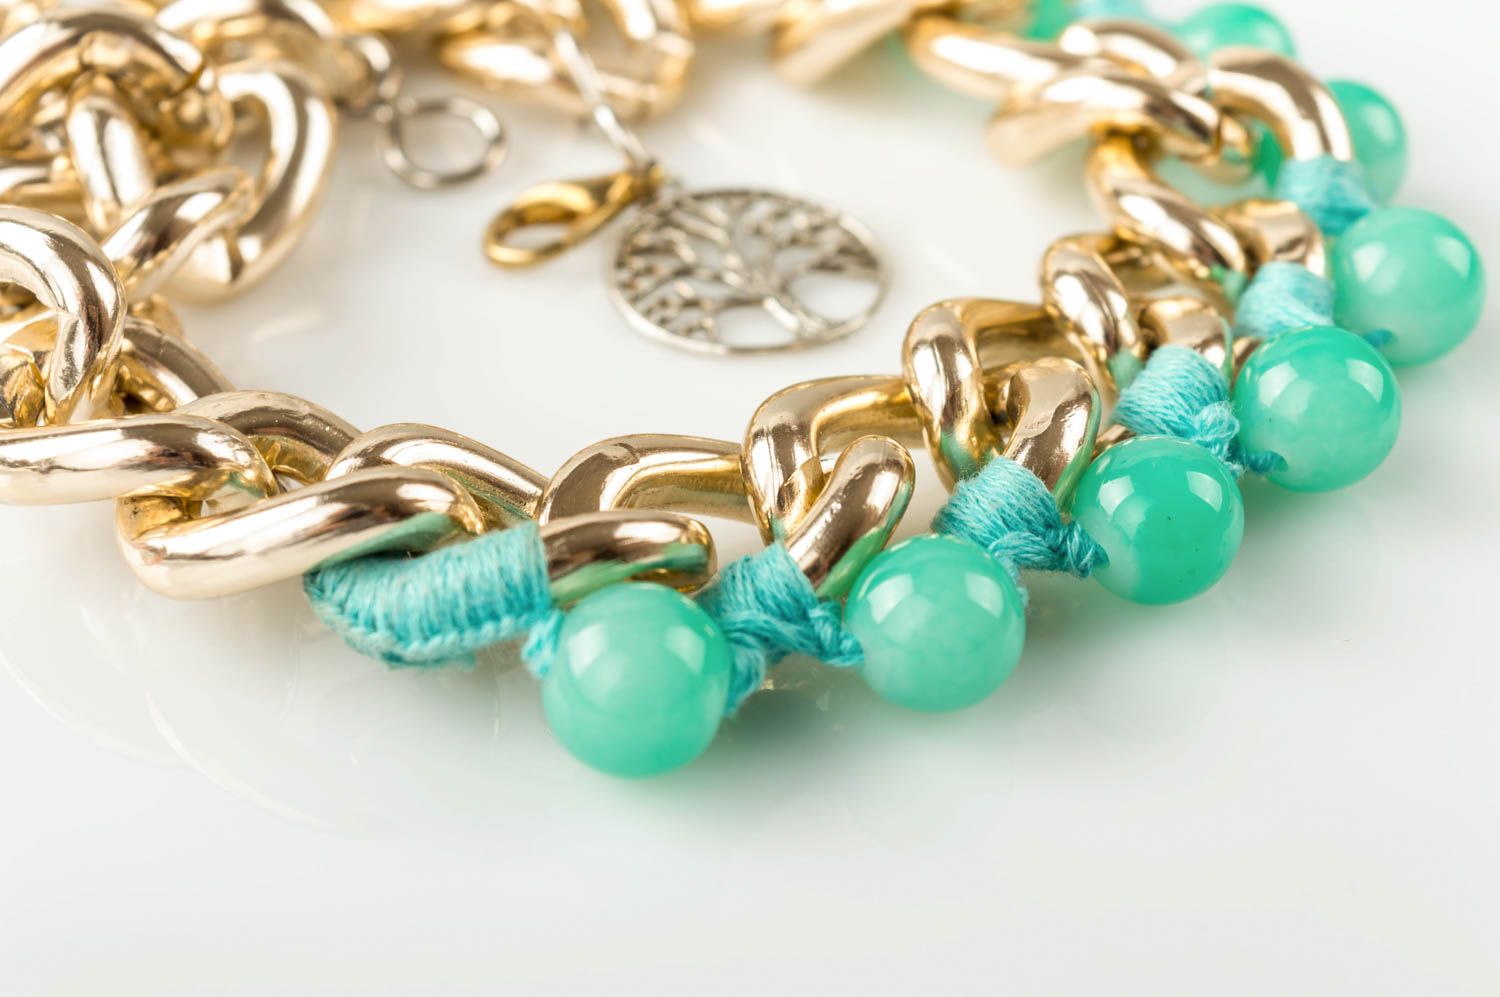 Handmade green necklace on chain stylish gold accessories beautiful jewelry photo 5